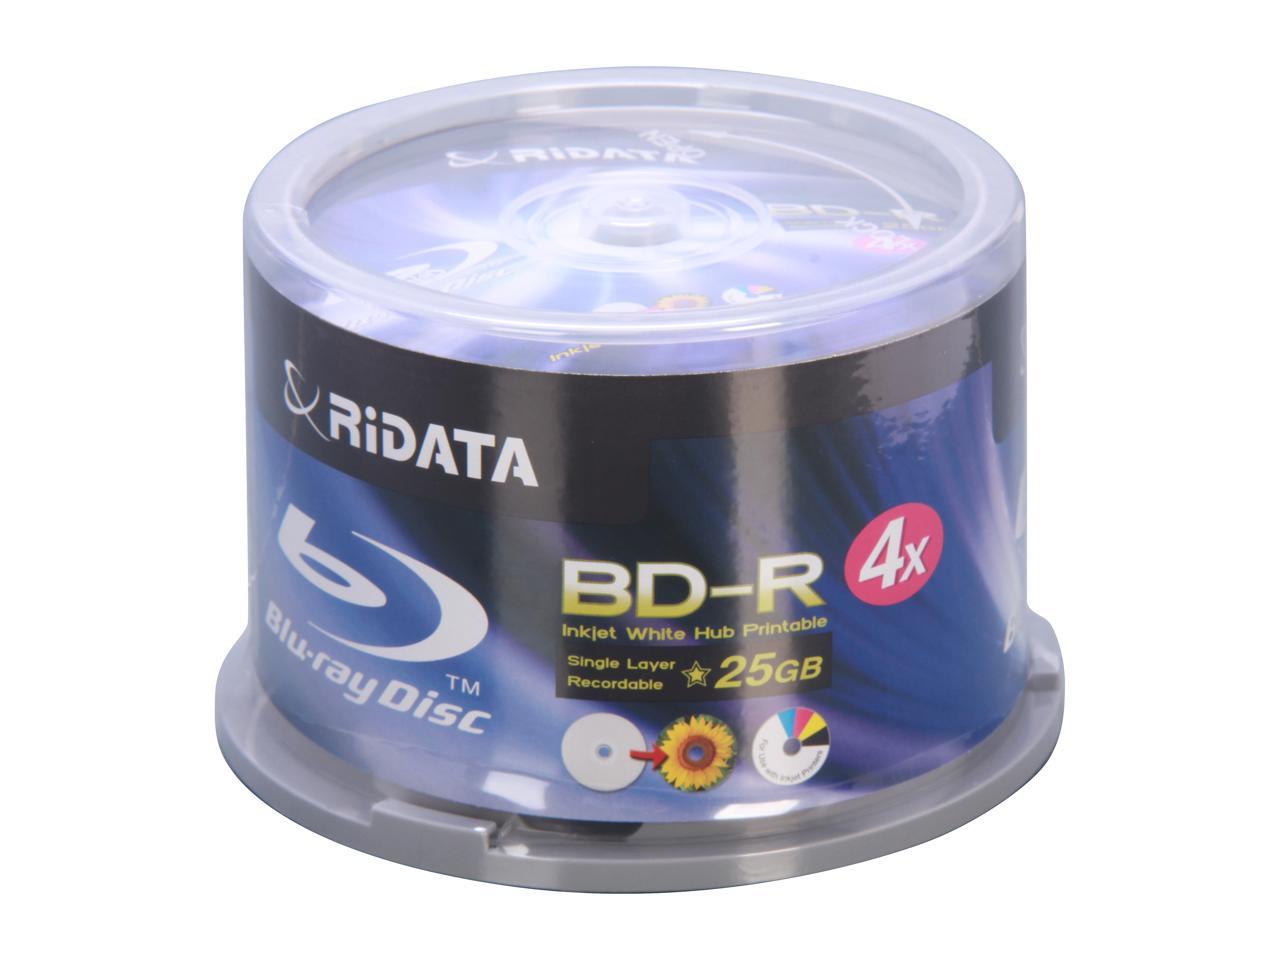 RiDATA 25GB 4X BD-R Inkjet White Hub-Printable 50 Packs Disc Model  BDR-254-RDIWN-CB50